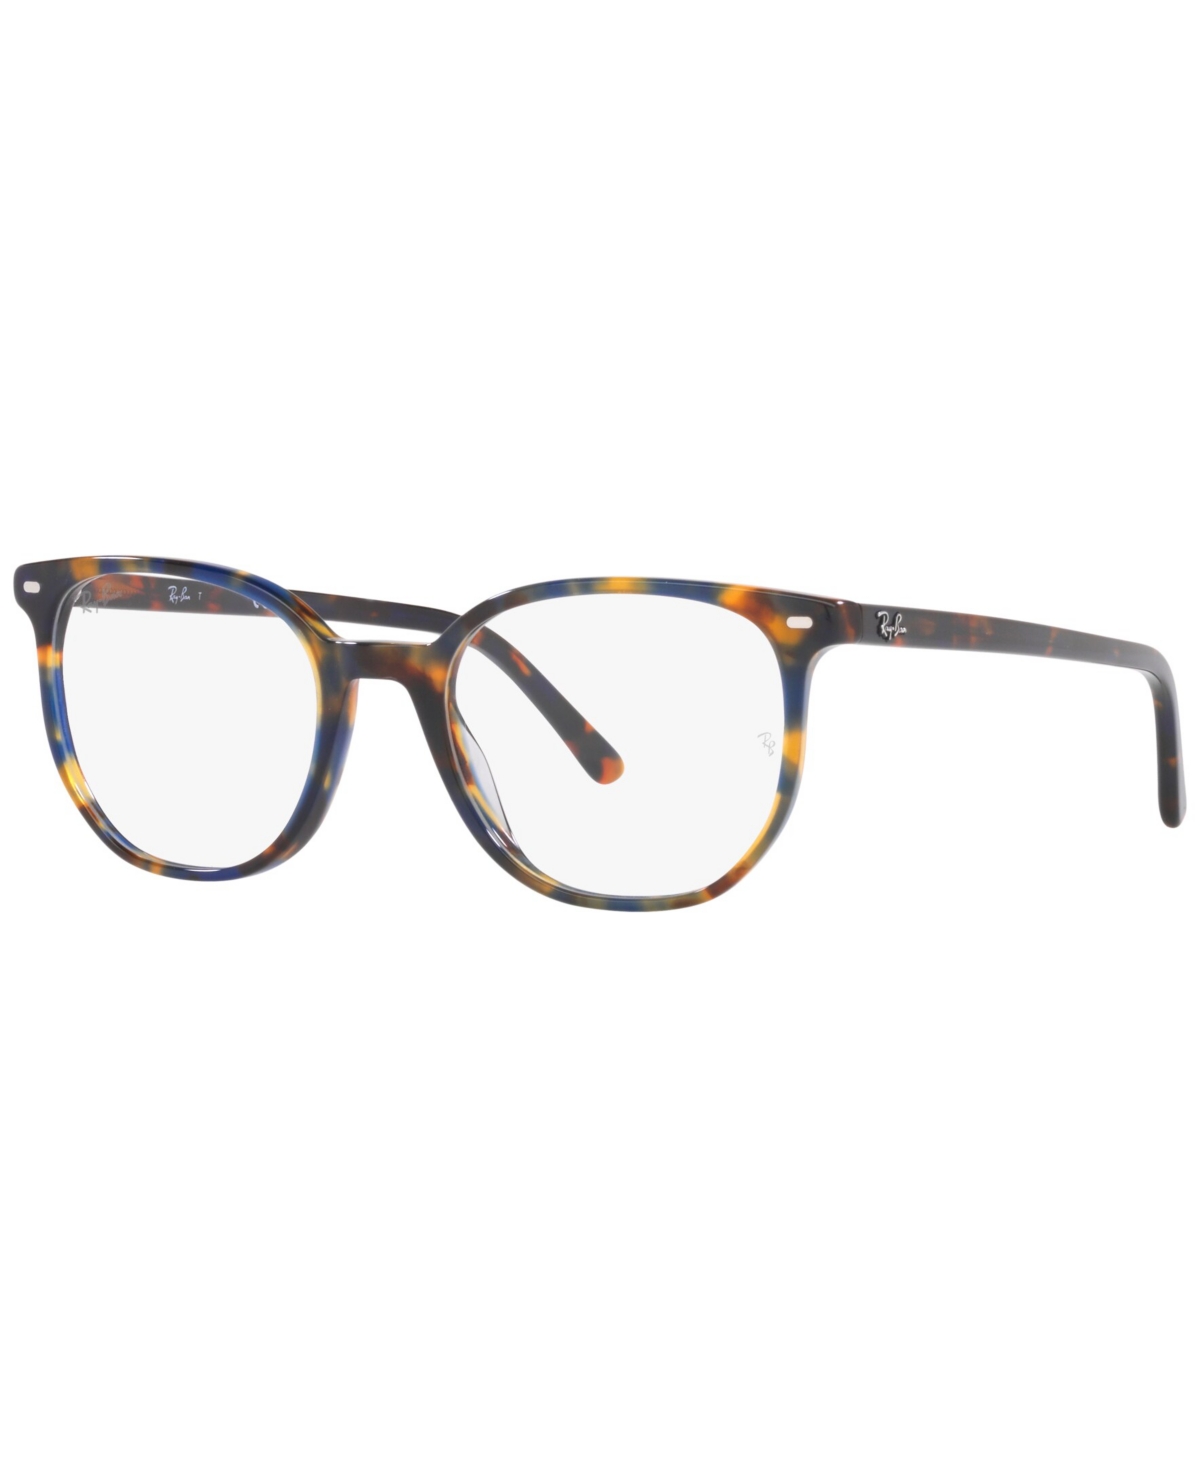 RB5397 Elliot Unisex Irregular Eyeglasses - Yellow and Blue Havana